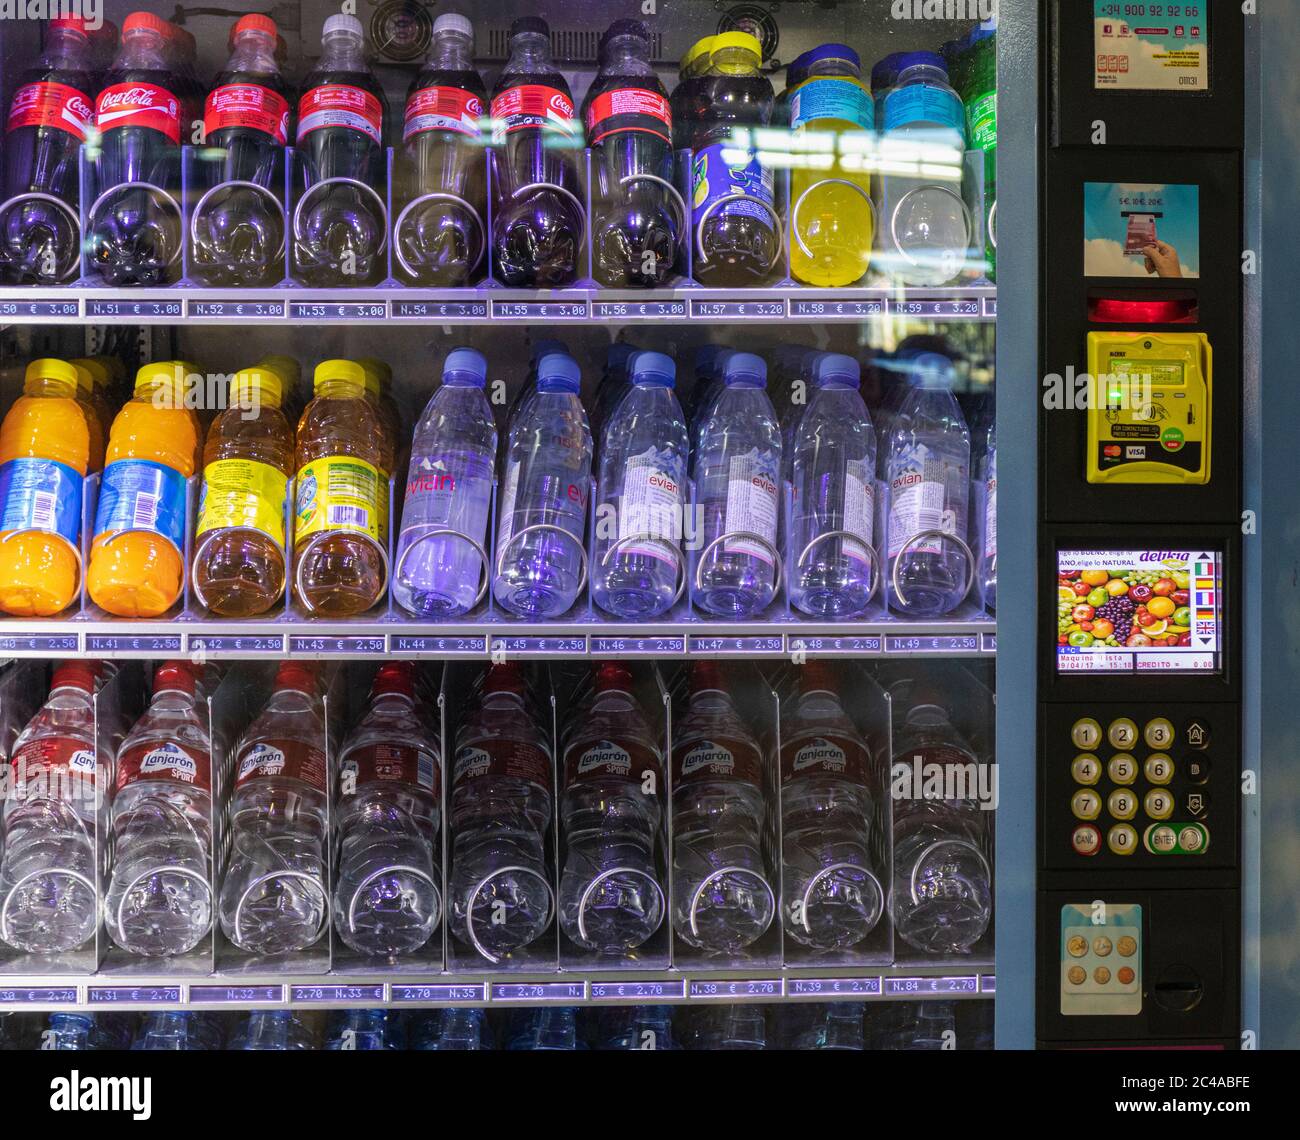 Getränkeautomat in Malaga Flughafen, Spanien Stockfotografie - Alamy